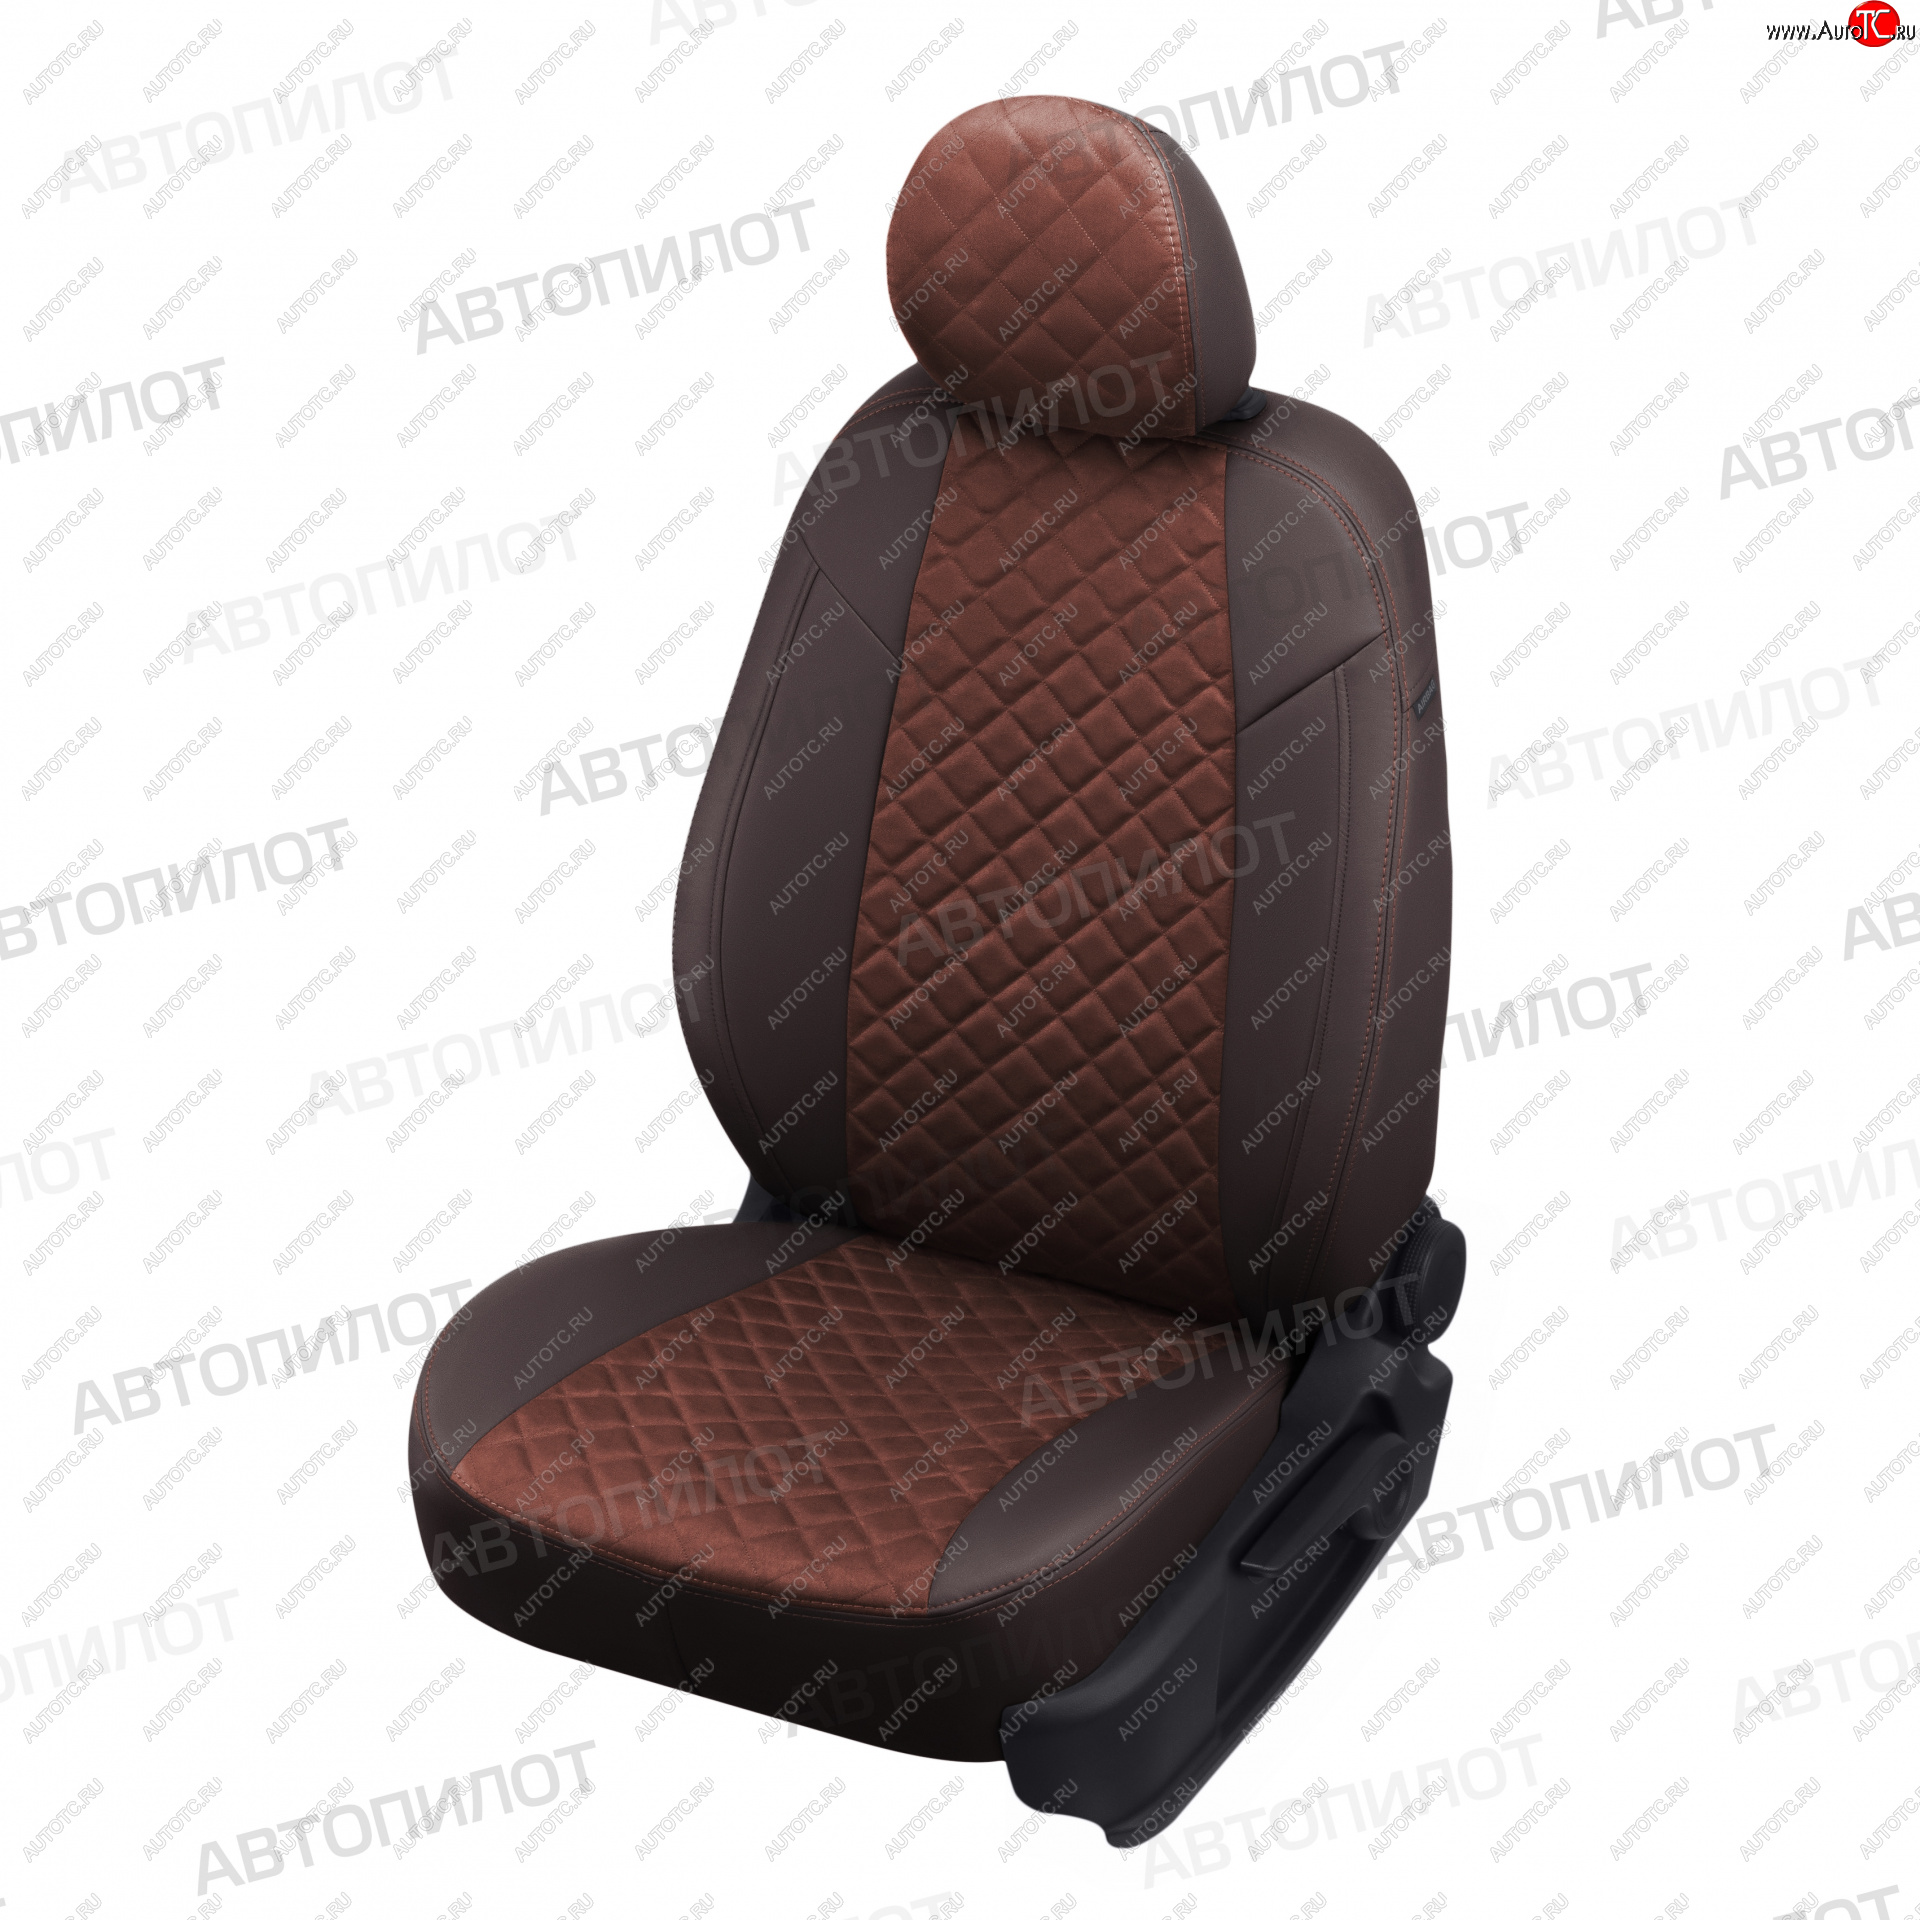 14 499 р. Чехлы сидений (GhiaTitanium, экокожа/алькантара) Автопилот Ромб  Ford Focus  2 (2004-2011) (шоколад)